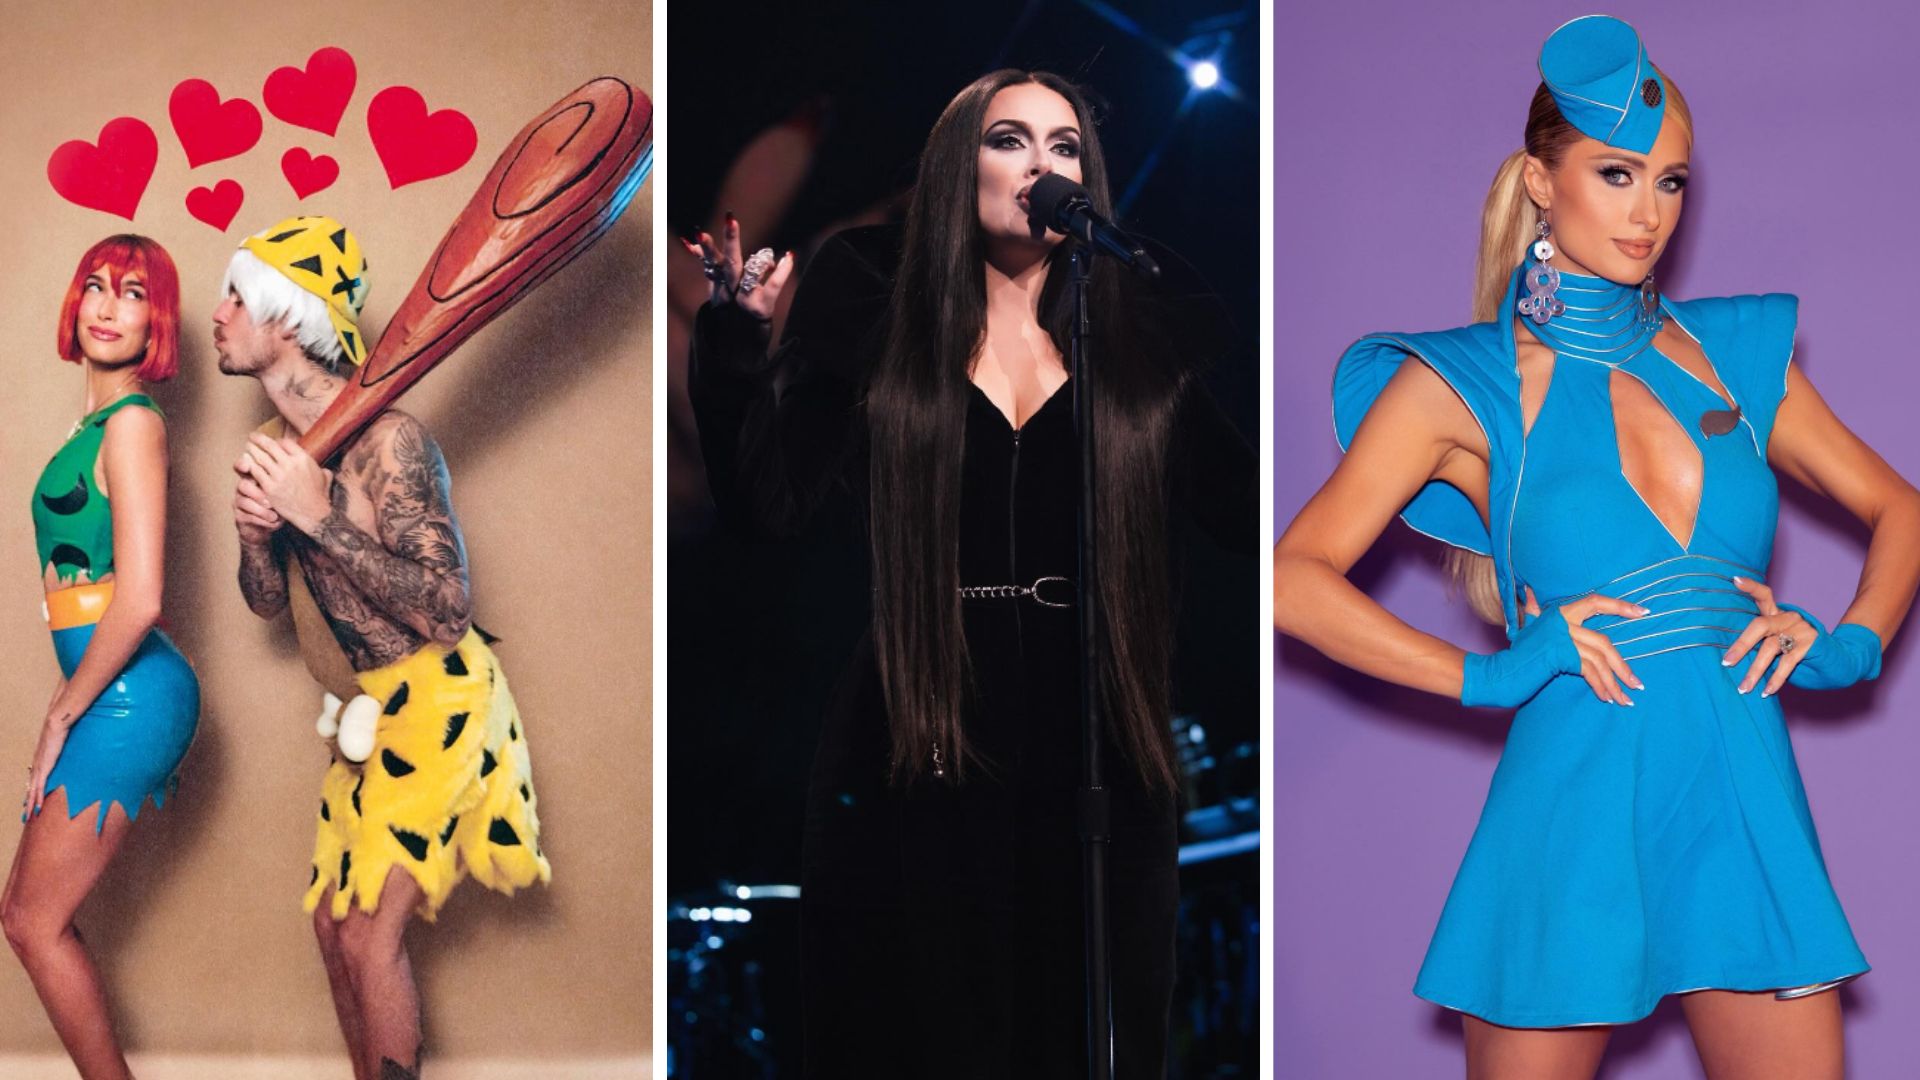 PICS: Kim Kardashian and Paris Hilton recreate iconic 'Queens of